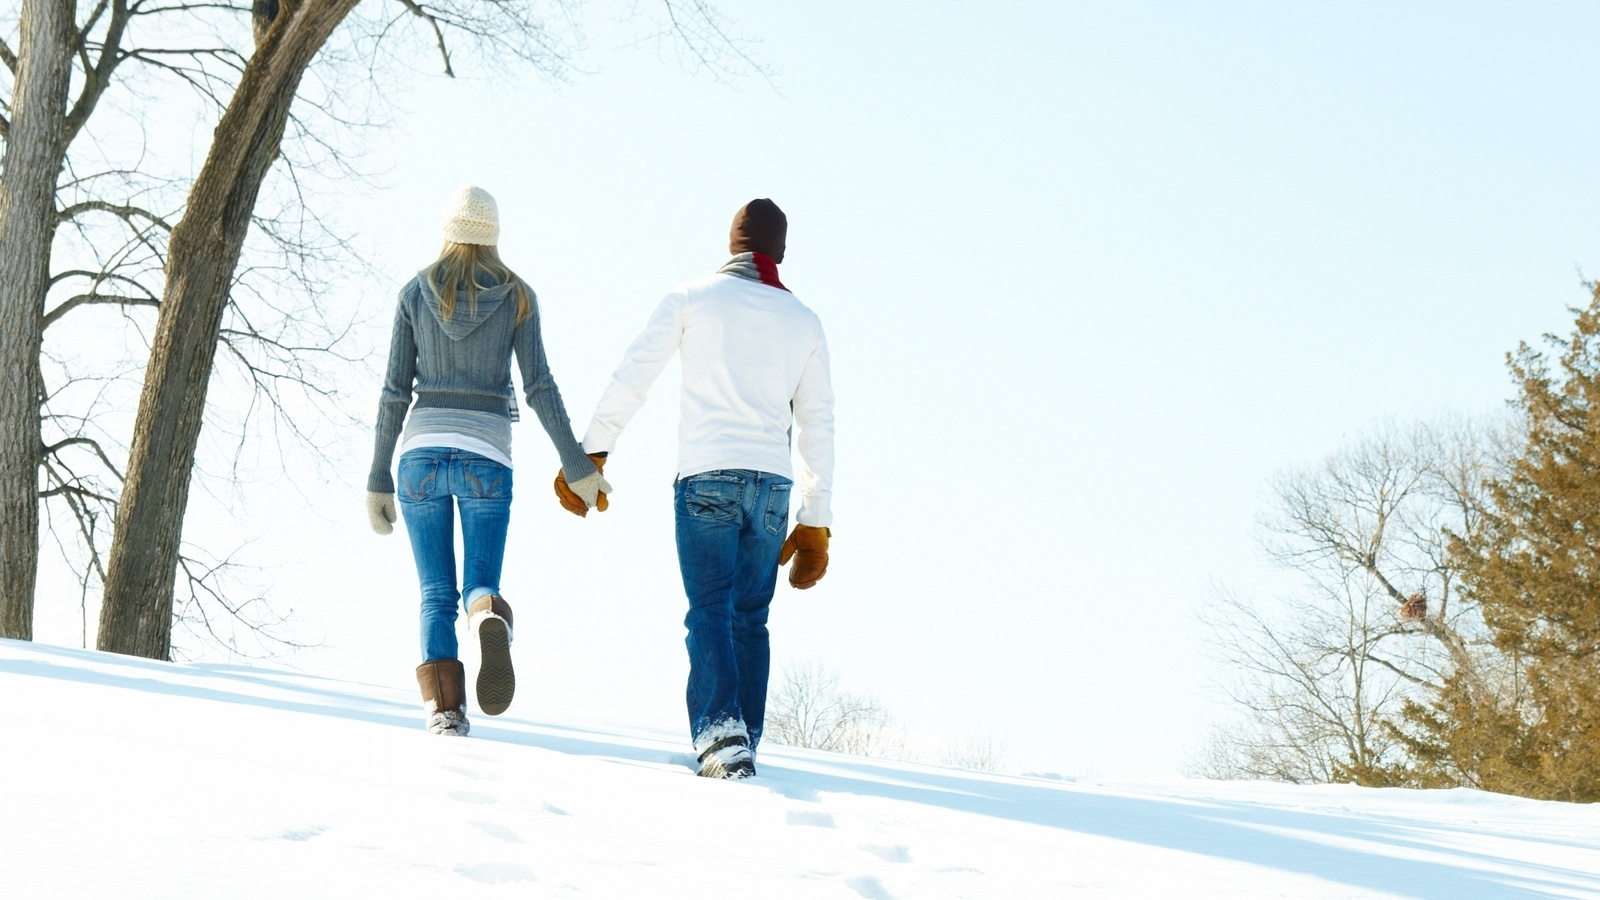 Картинка: Пара, парень, девушка, прогулка, спина, идут, за руки, шапка, зима, снег, деревья